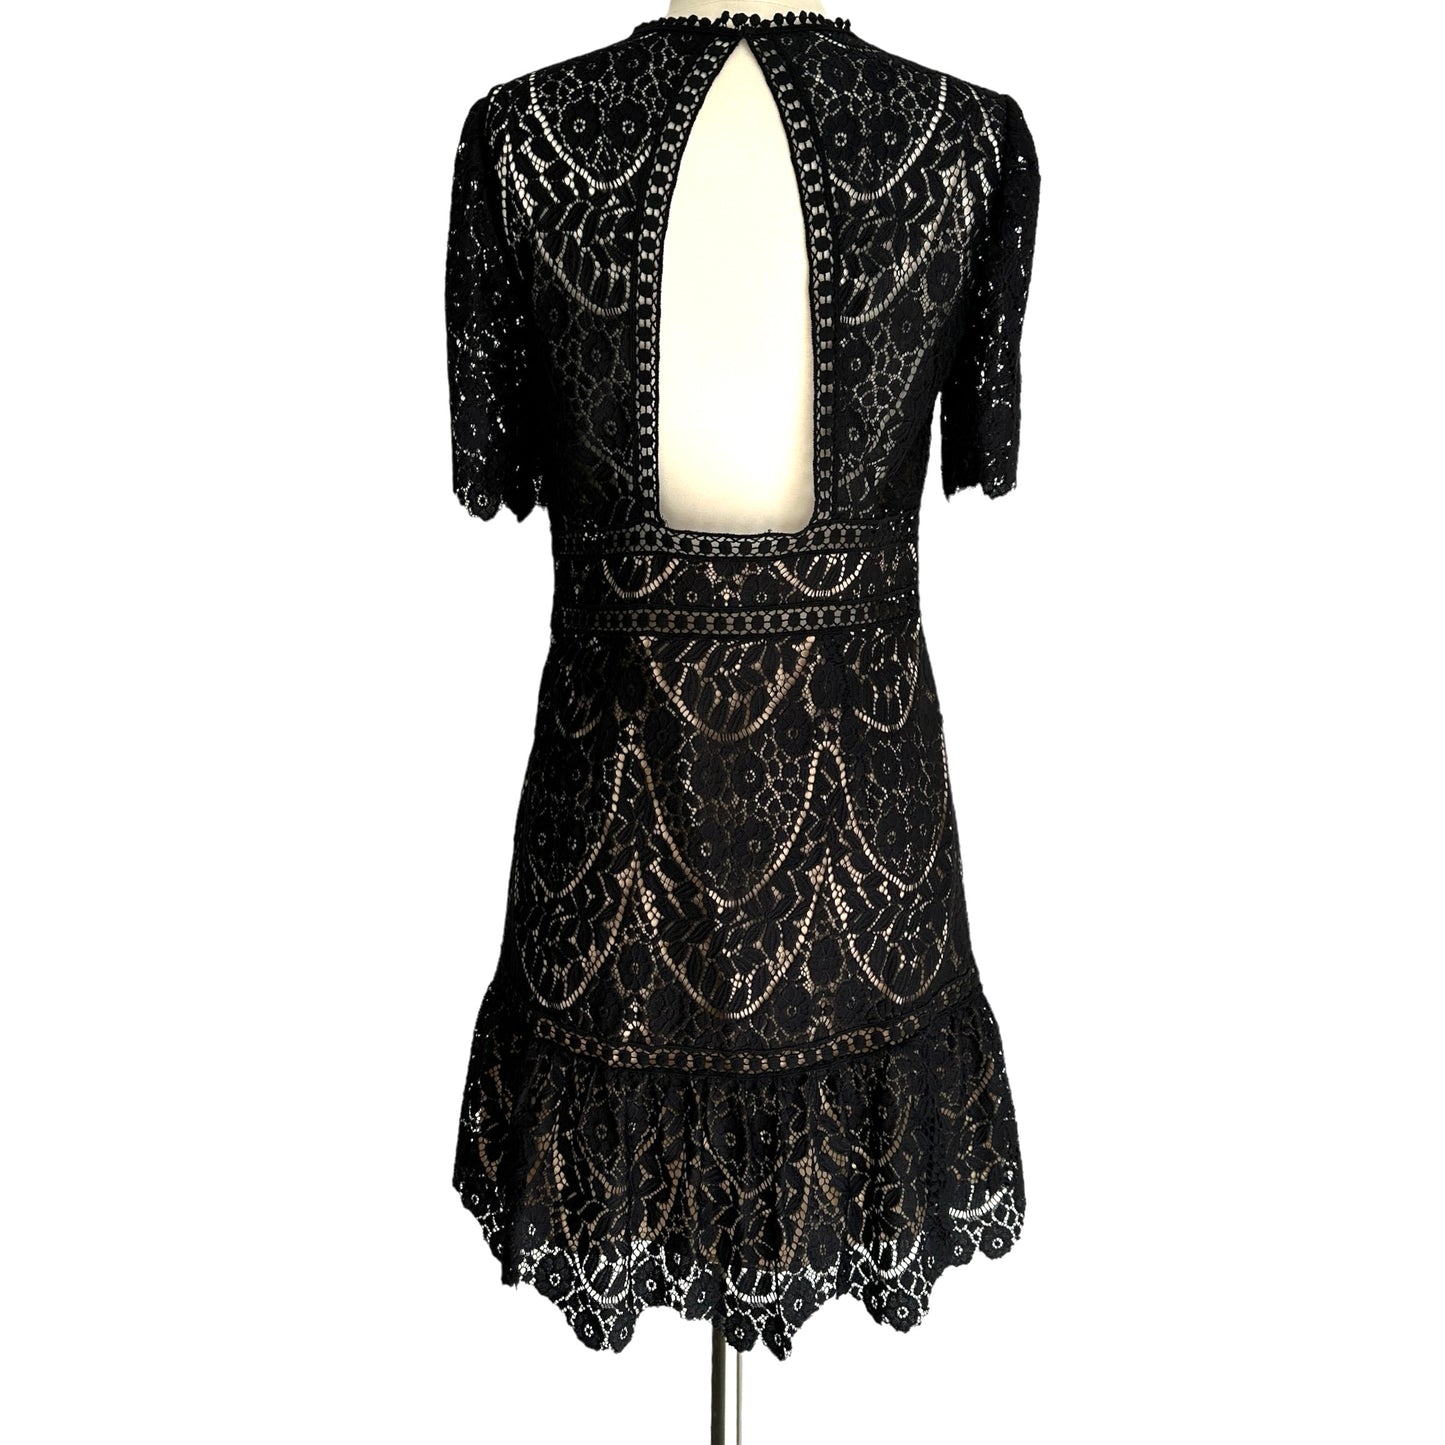 Black Lace Dress - M